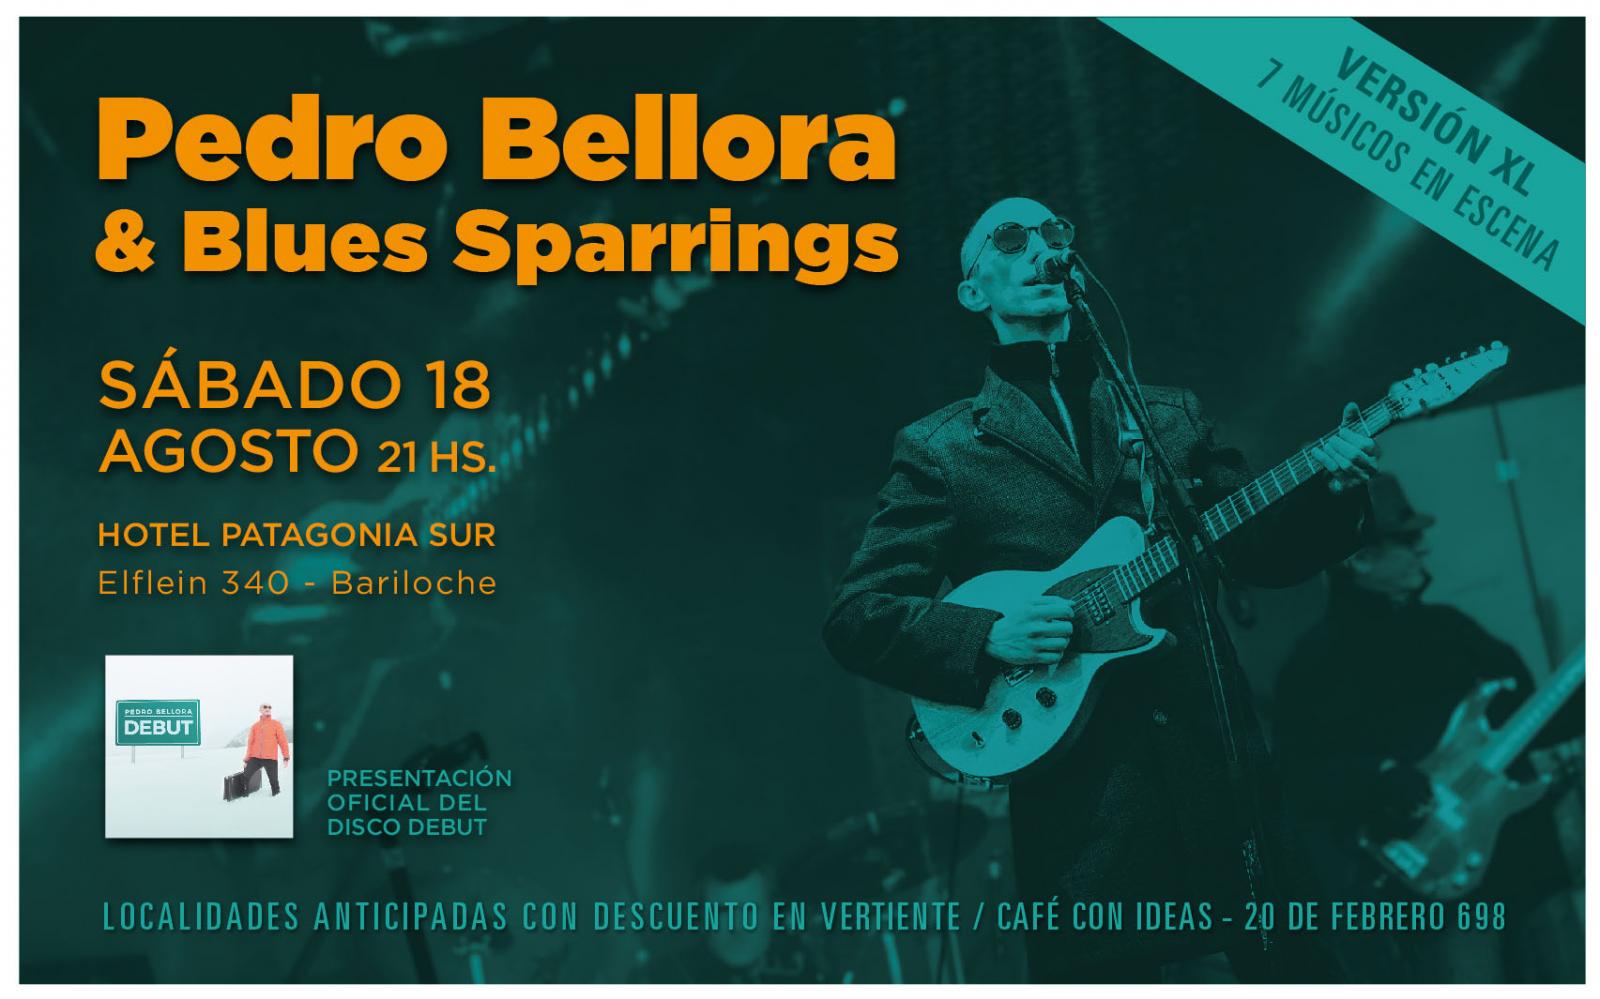 Pedro Bellora & Blues Sparrings